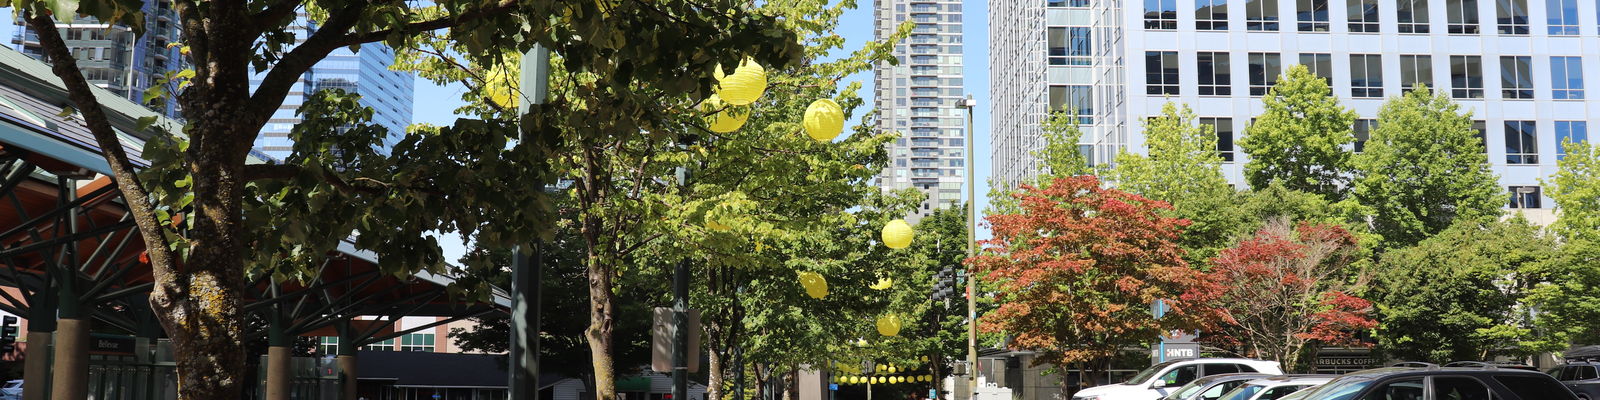 Yellow lanterns in Downtown